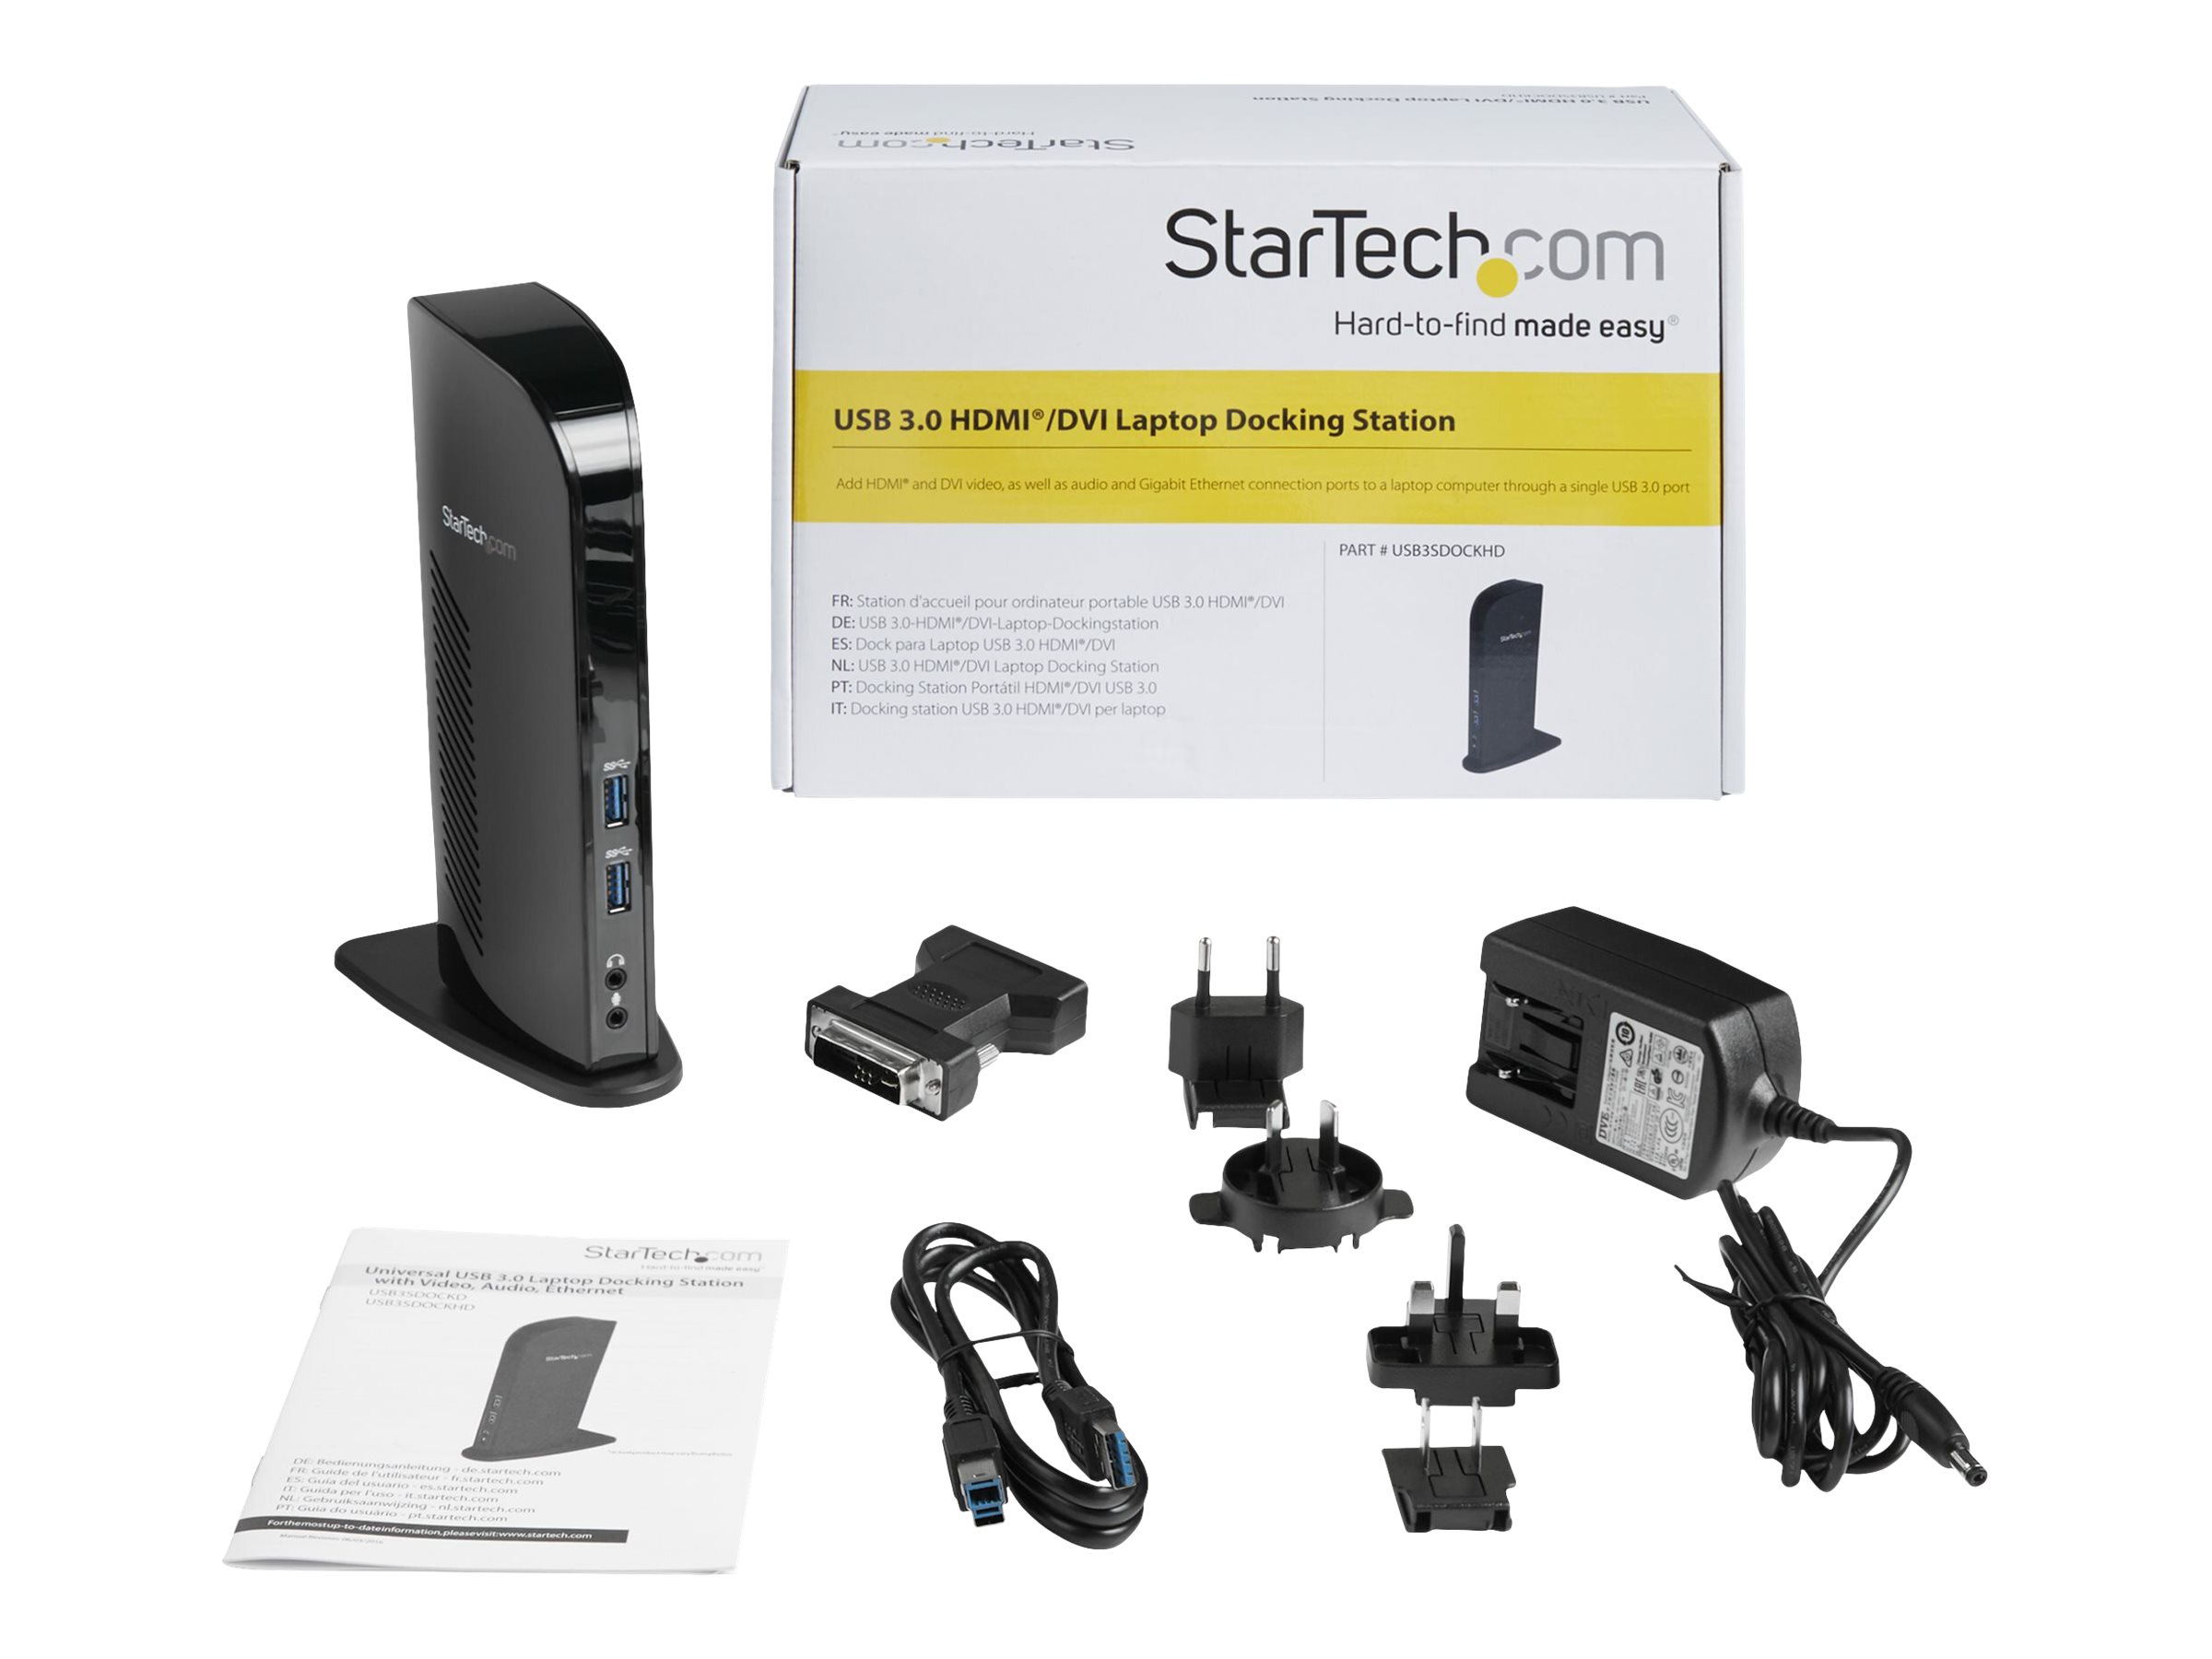 StarTech.com USB 3.0 Dockingstation, kompatibel mit Windows / macOS, unterstützt Dual Displays, HDMI und DVI, inkl. DVI zu VGA Adapter